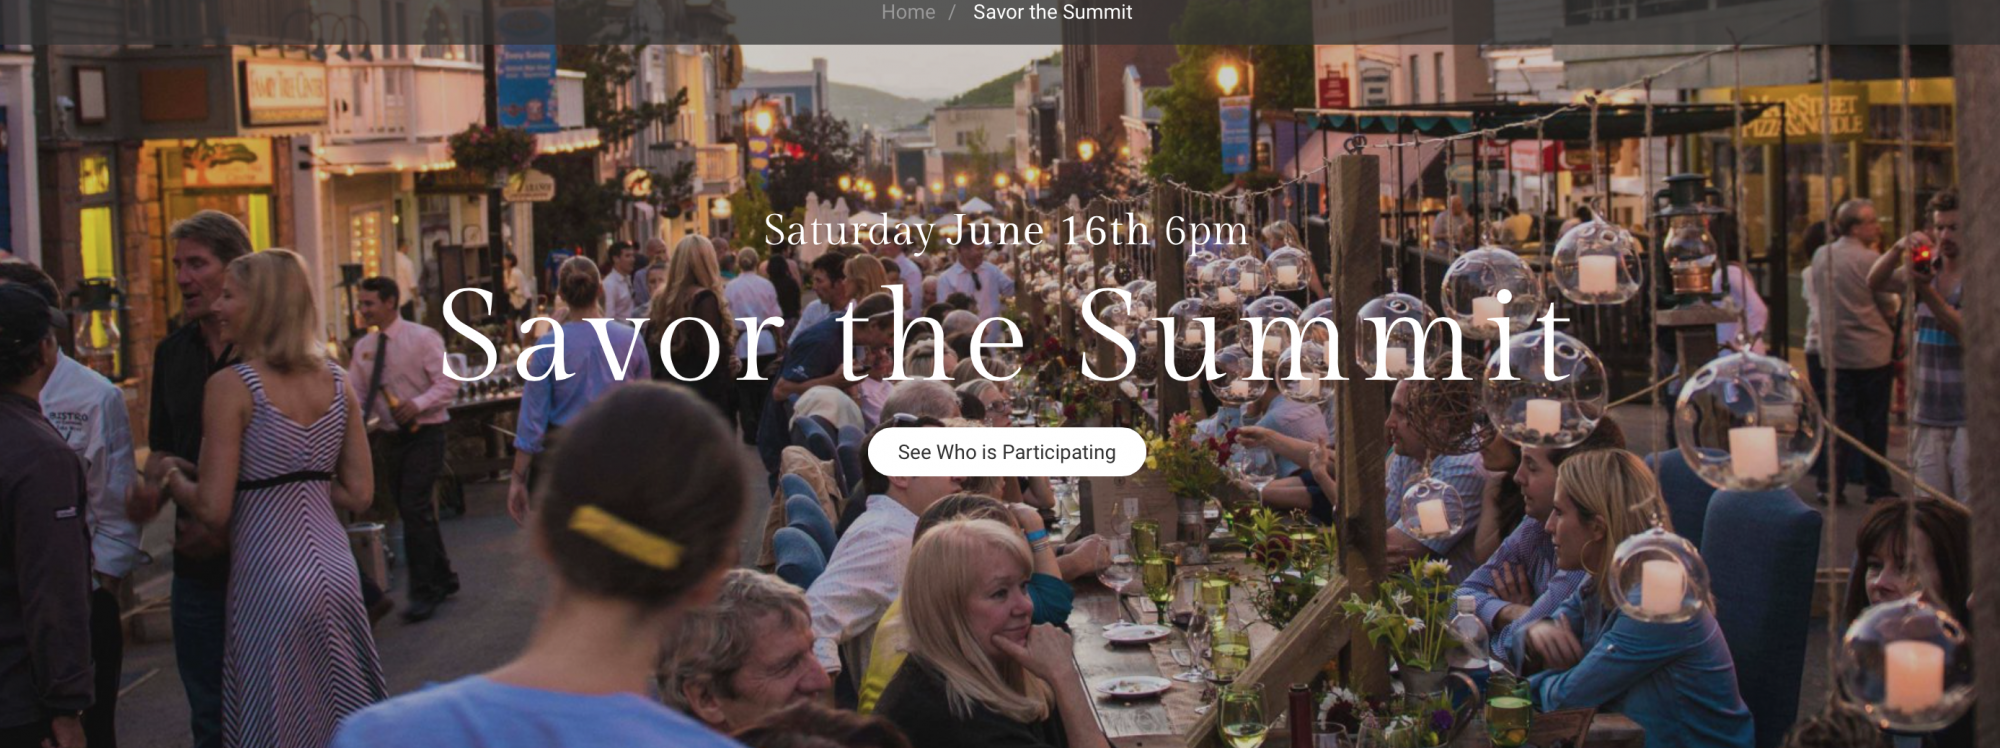 Savor the Summit Summer Outdoor Dining Park City Utah